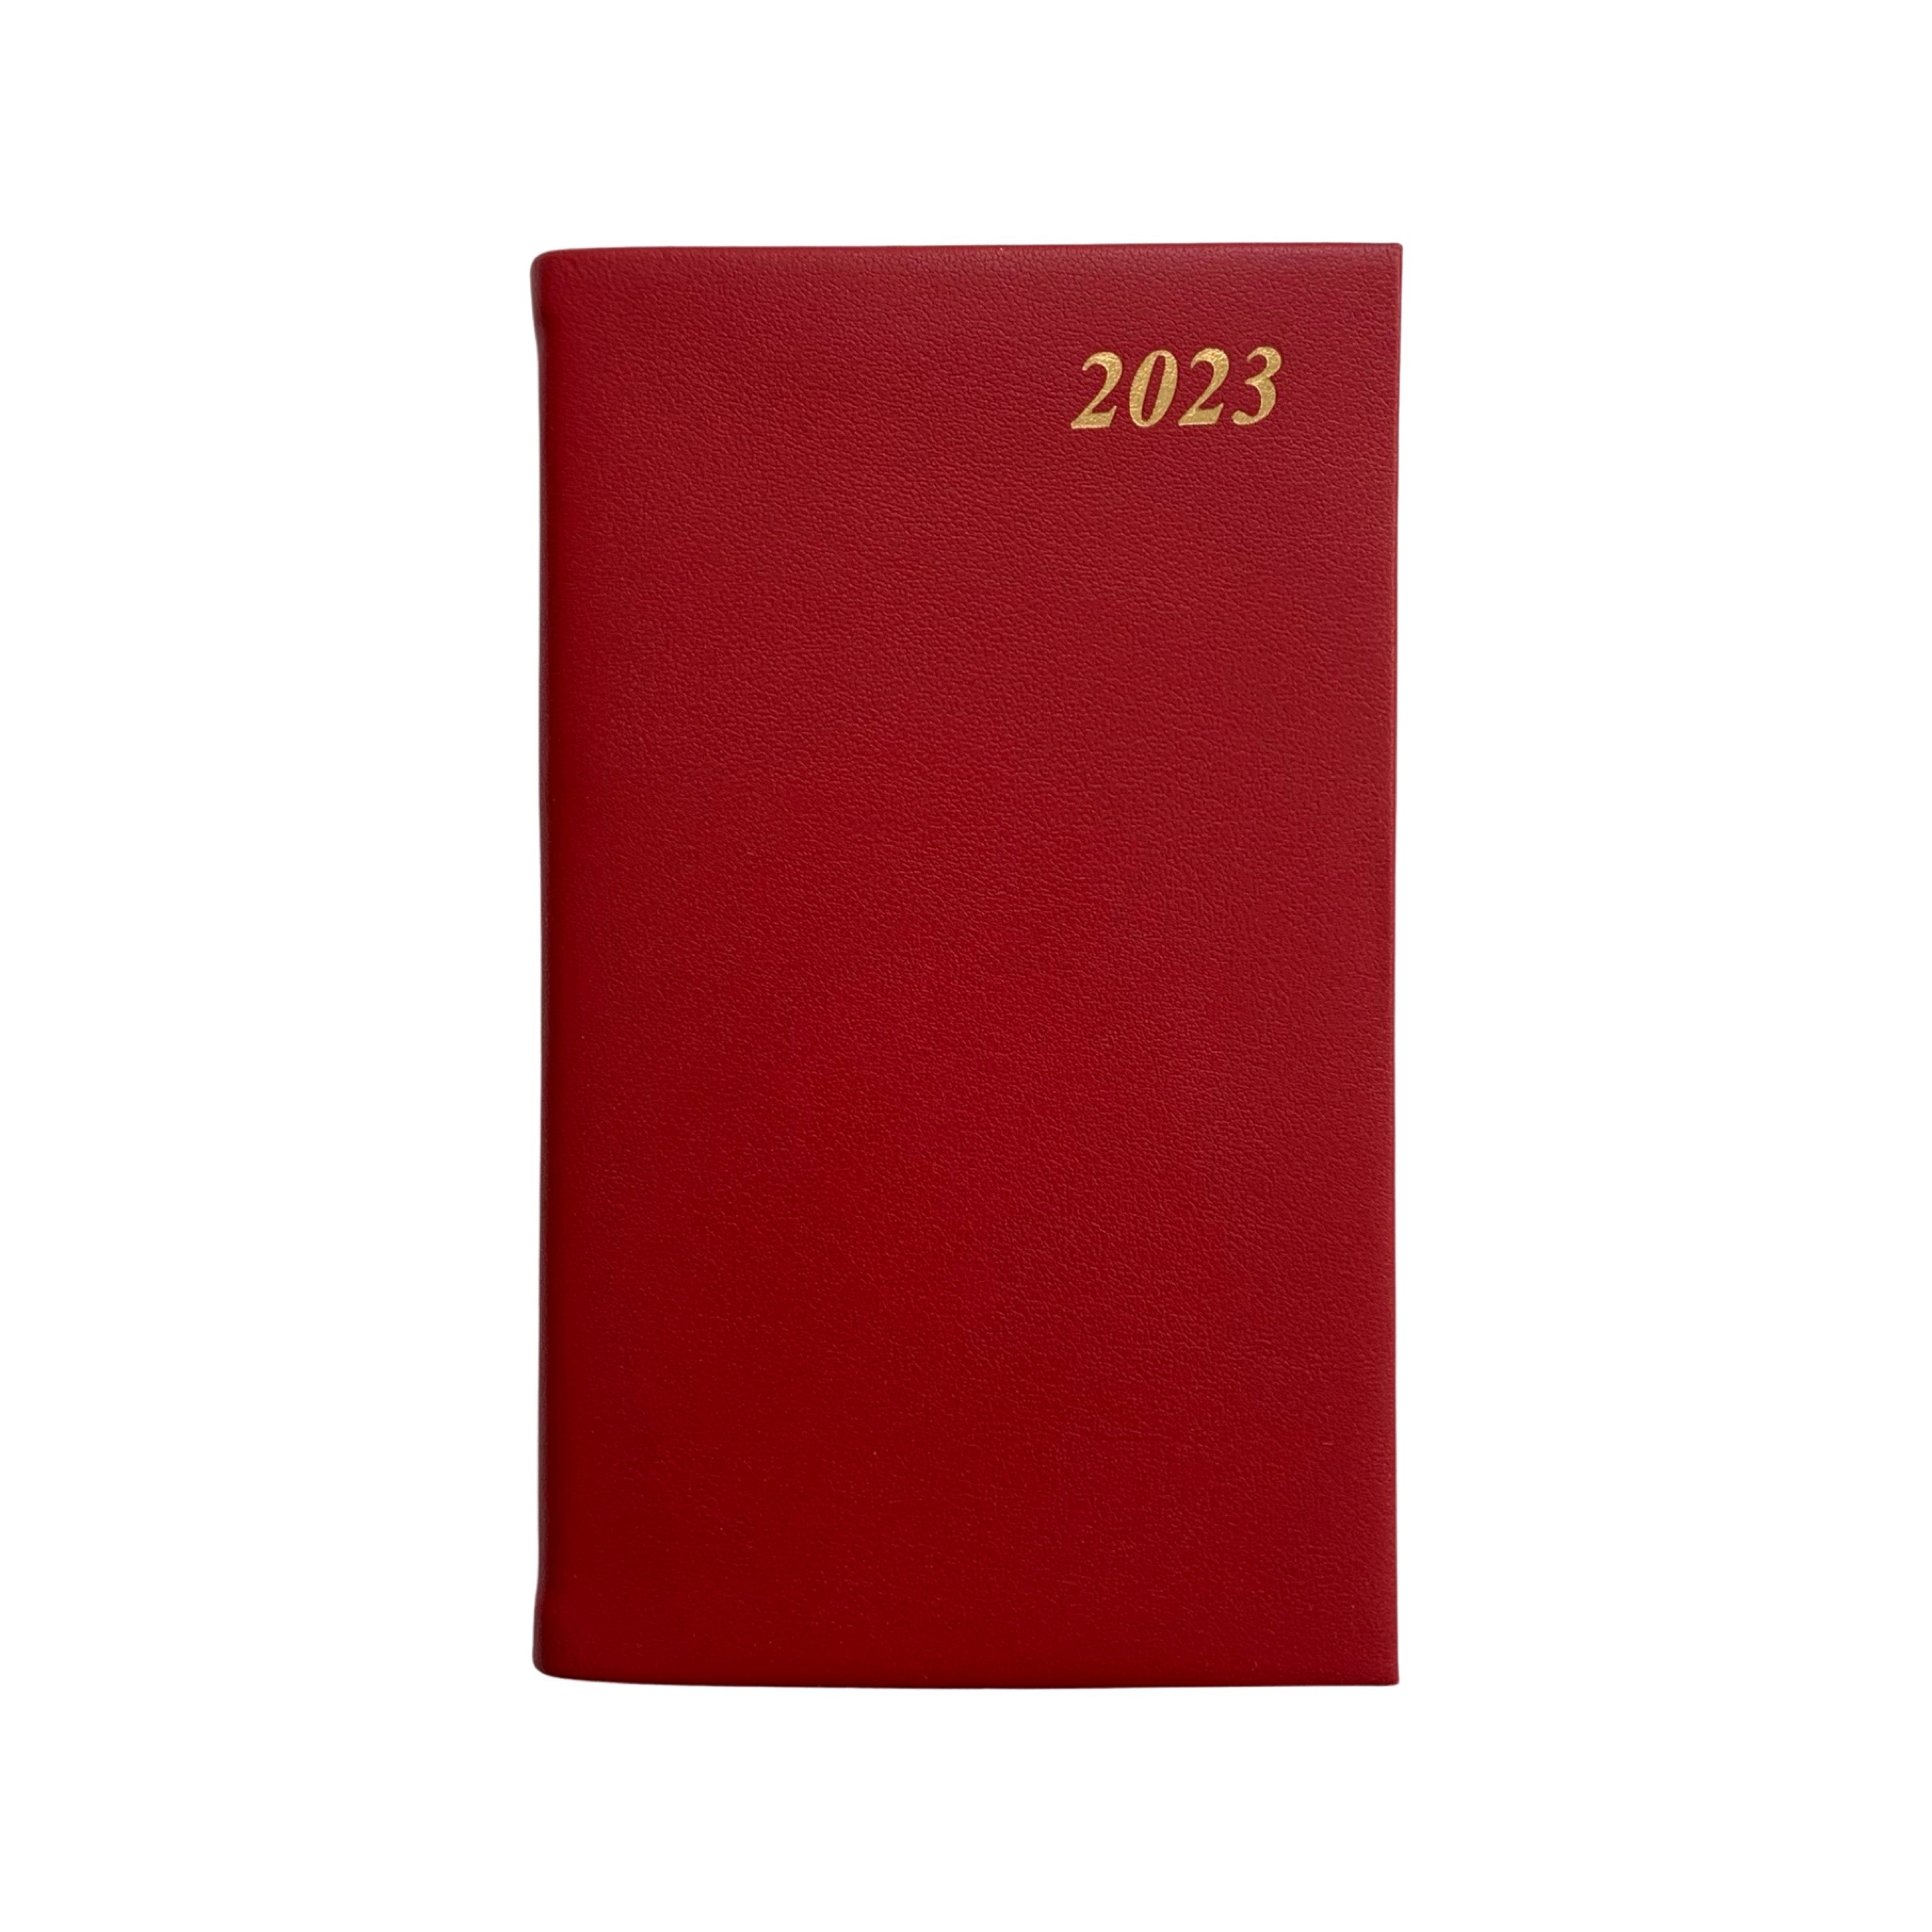 Charing Cross 2023 5x3 Planner Book Leather Pocket Calendar